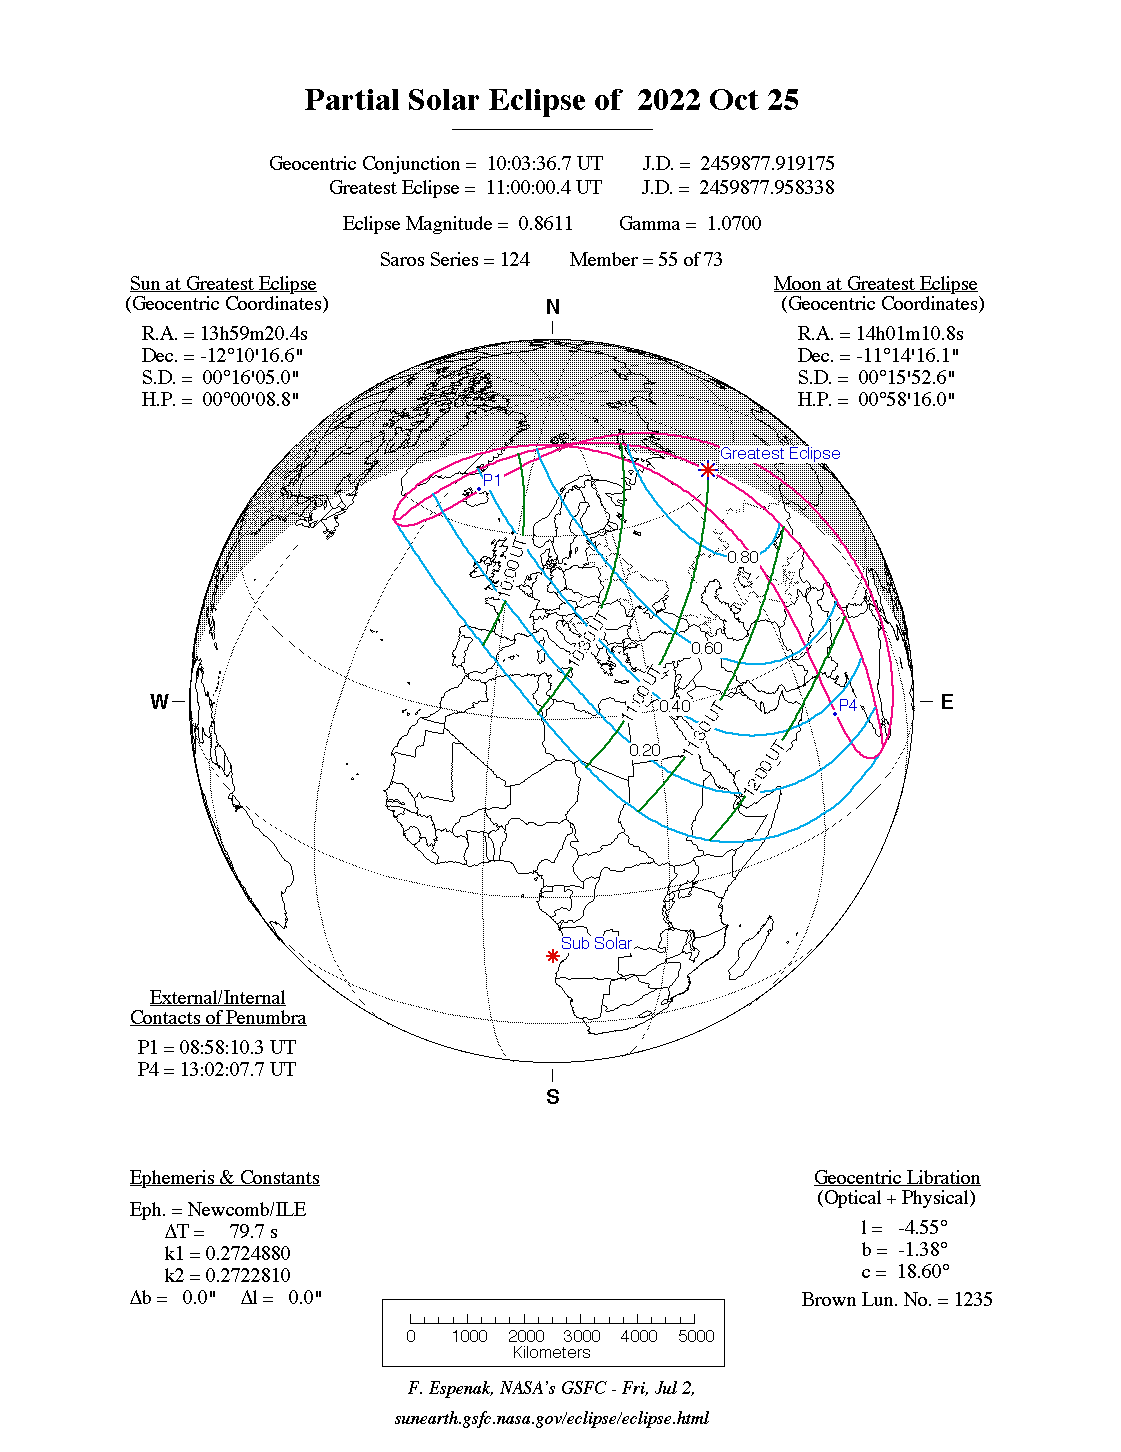 Fig. 2. 25 ottobre 2022, eclissi parziale di Sole: visibilità